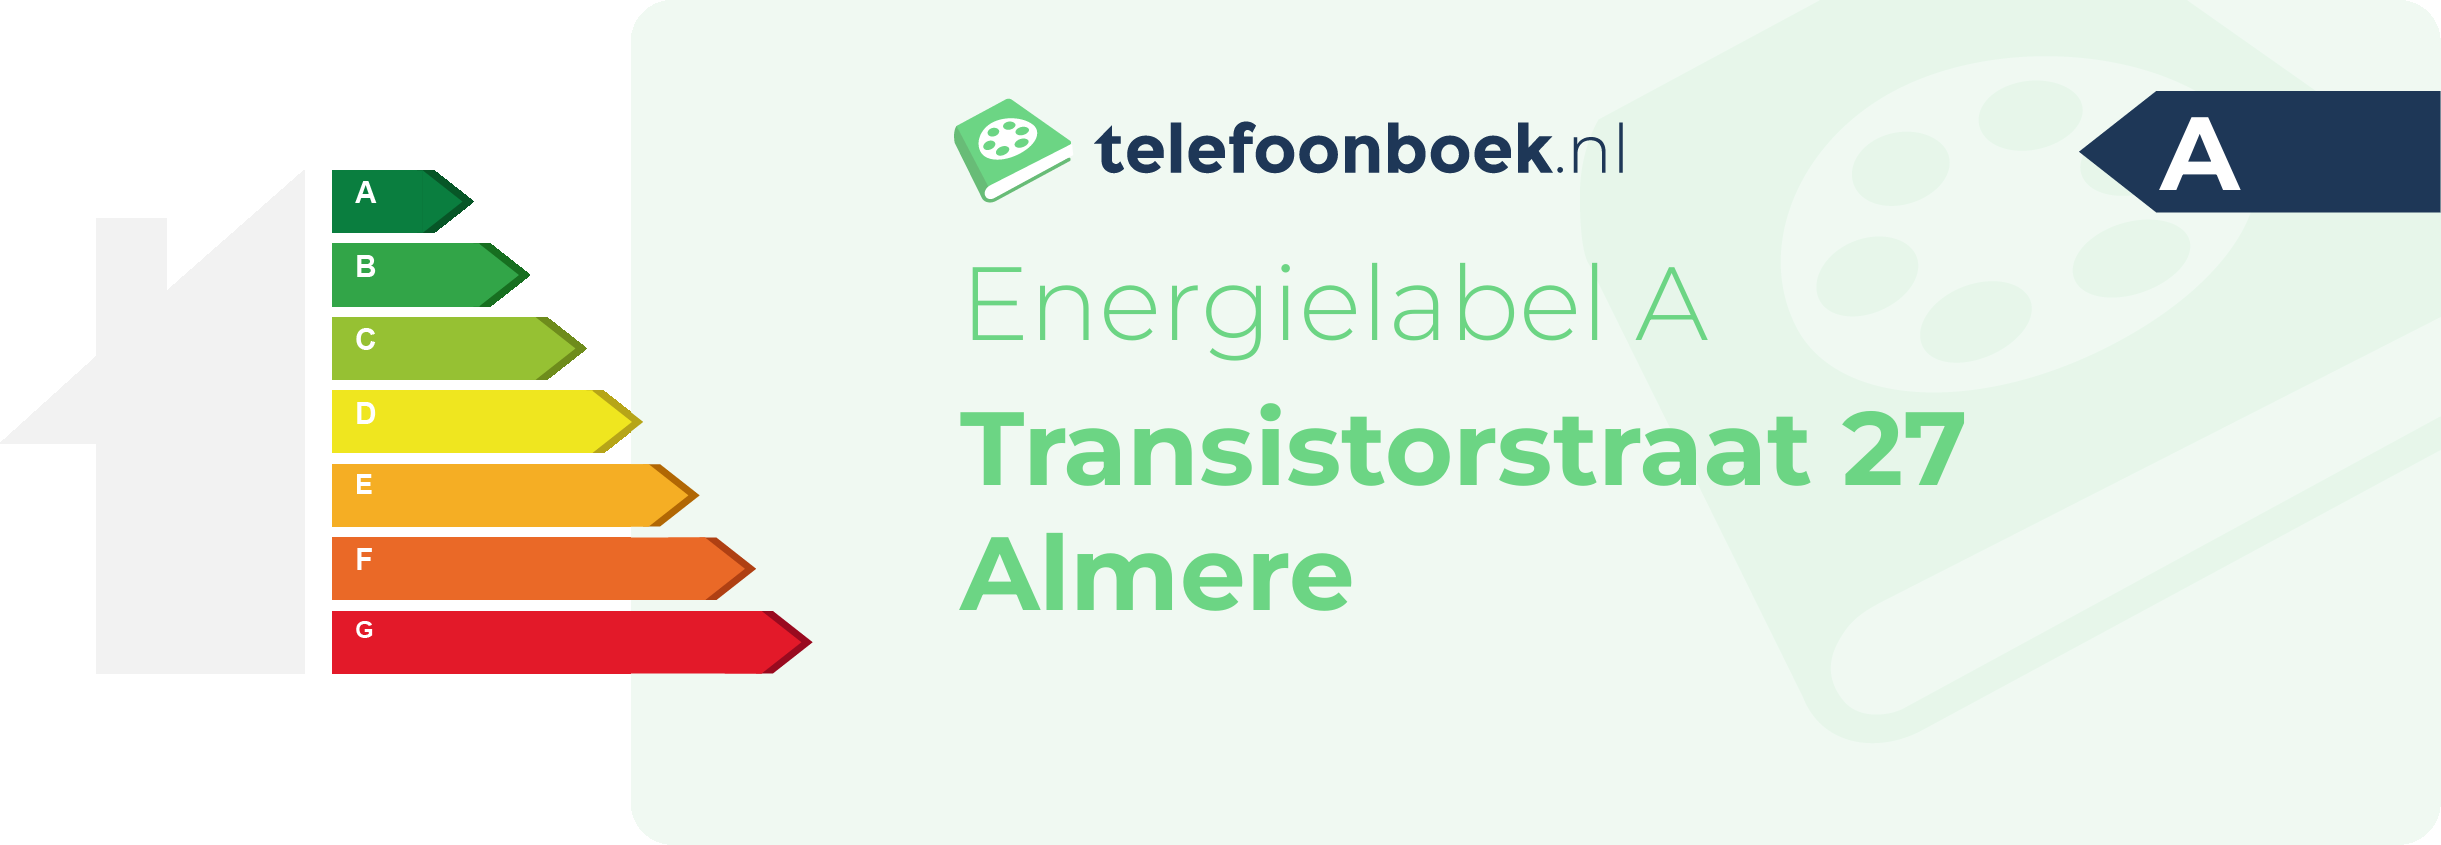 Energielabel Transistorstraat 27 Almere